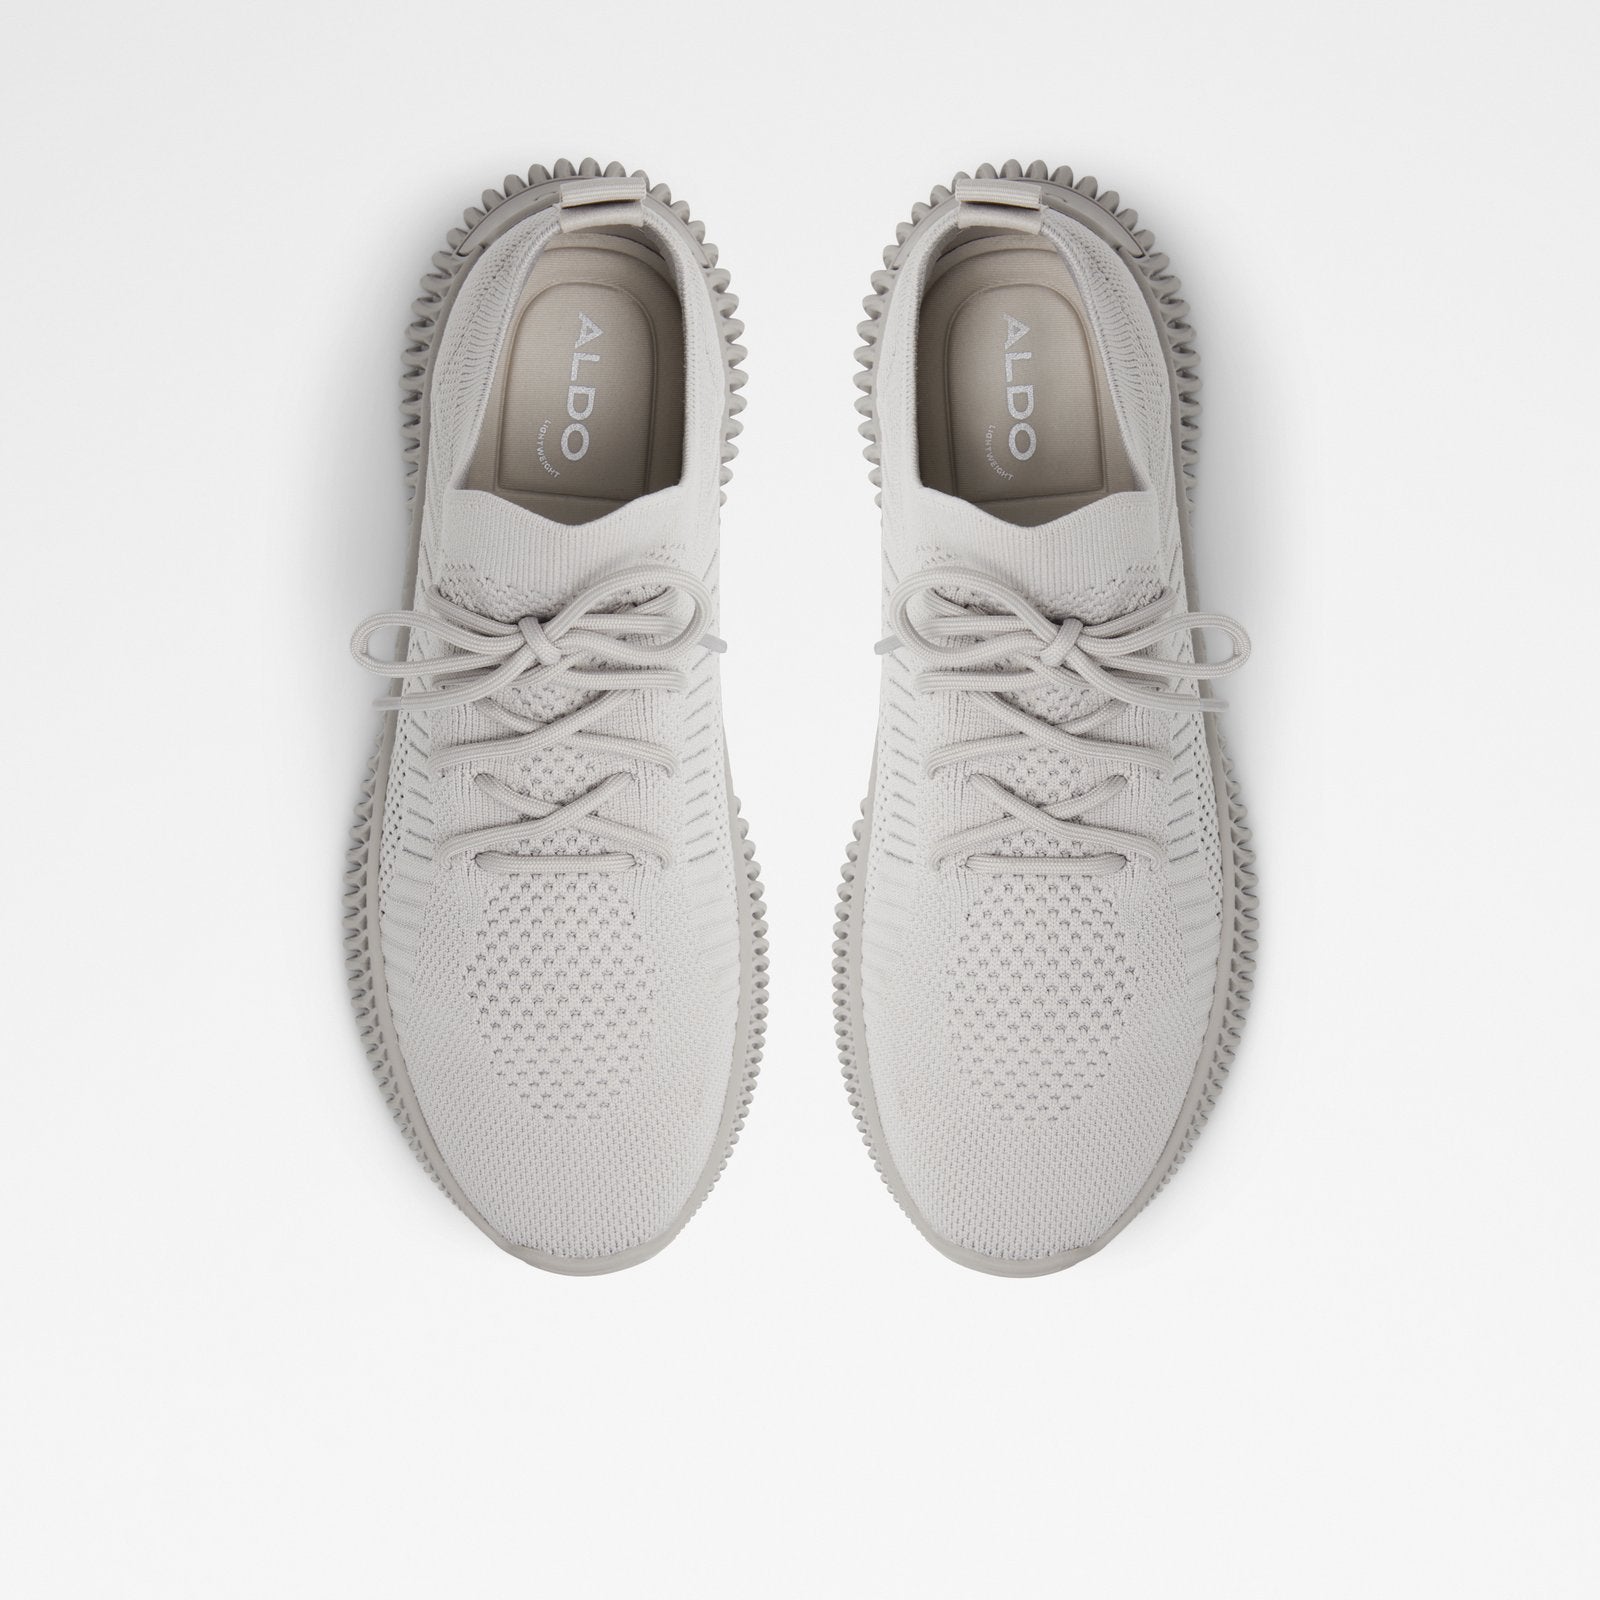 Gilgai / Sneakers Men Shoes - Light Grey - ALDO KSA